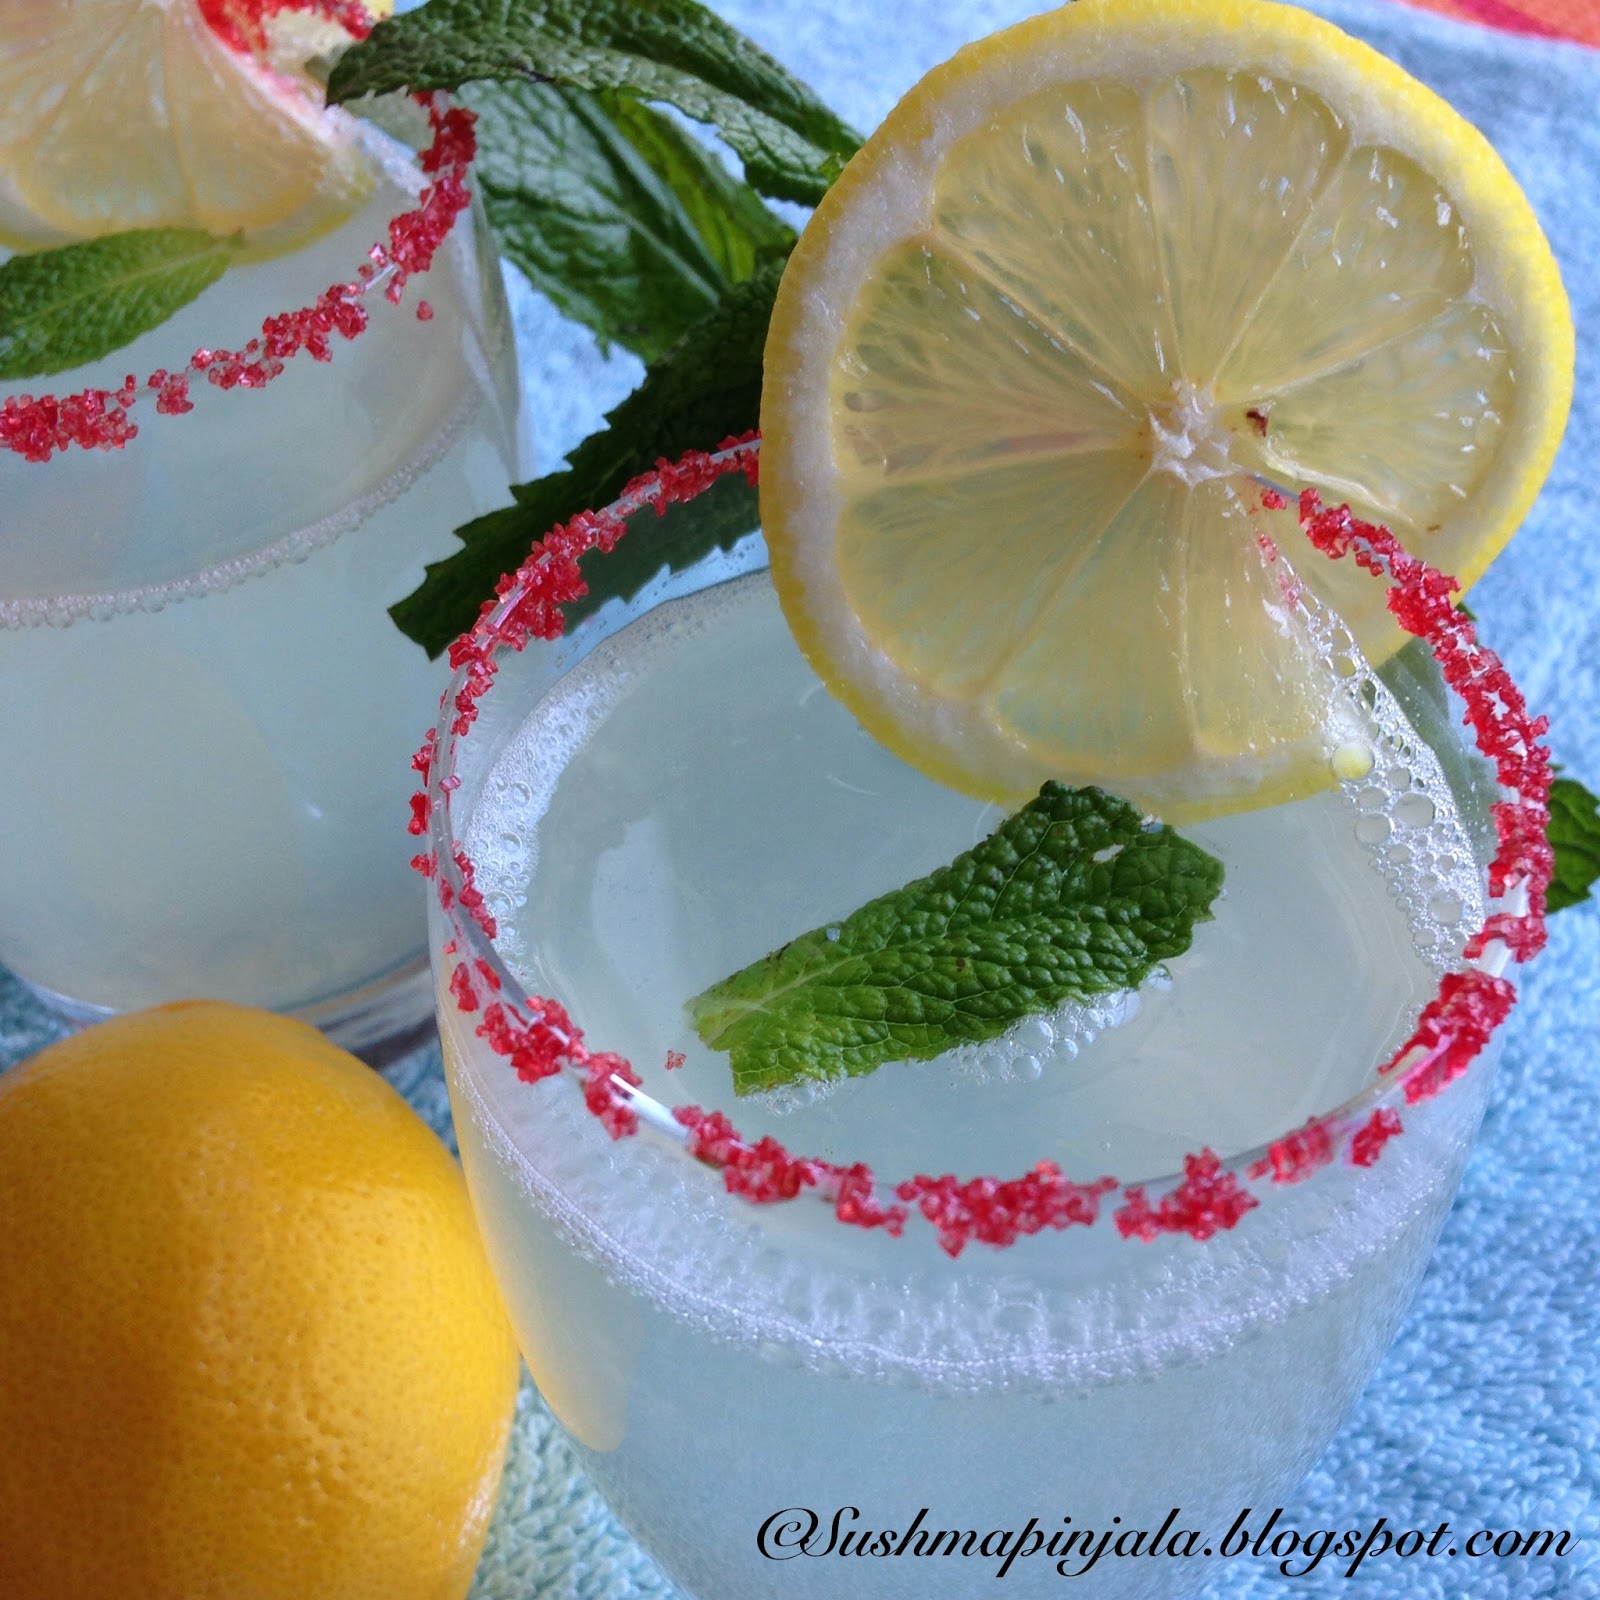 Lemonade - How to make perfect Lemonade